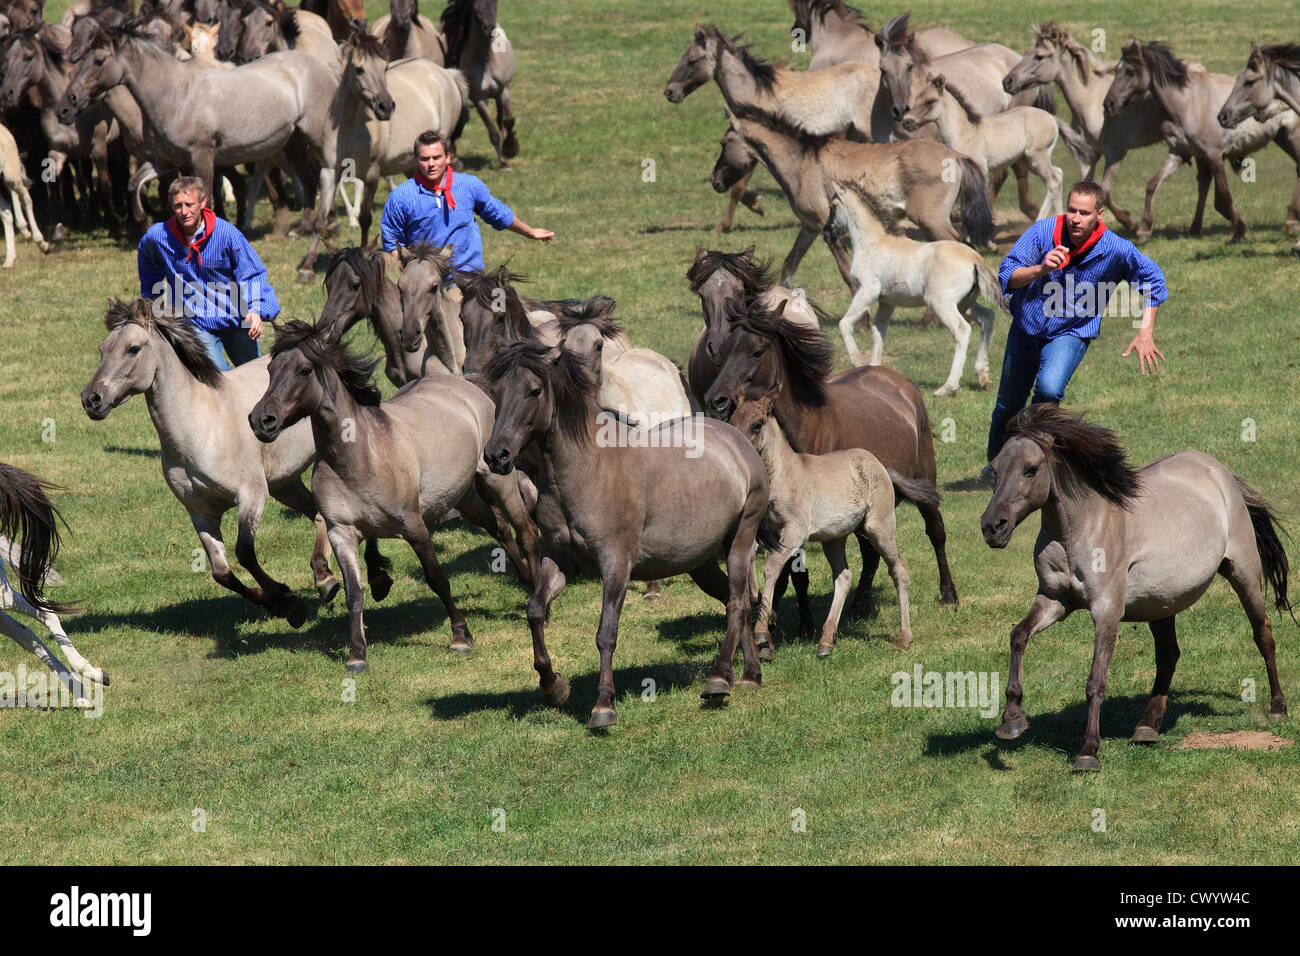 Catching of wild horses, Duelmen, Germany Stock Photo